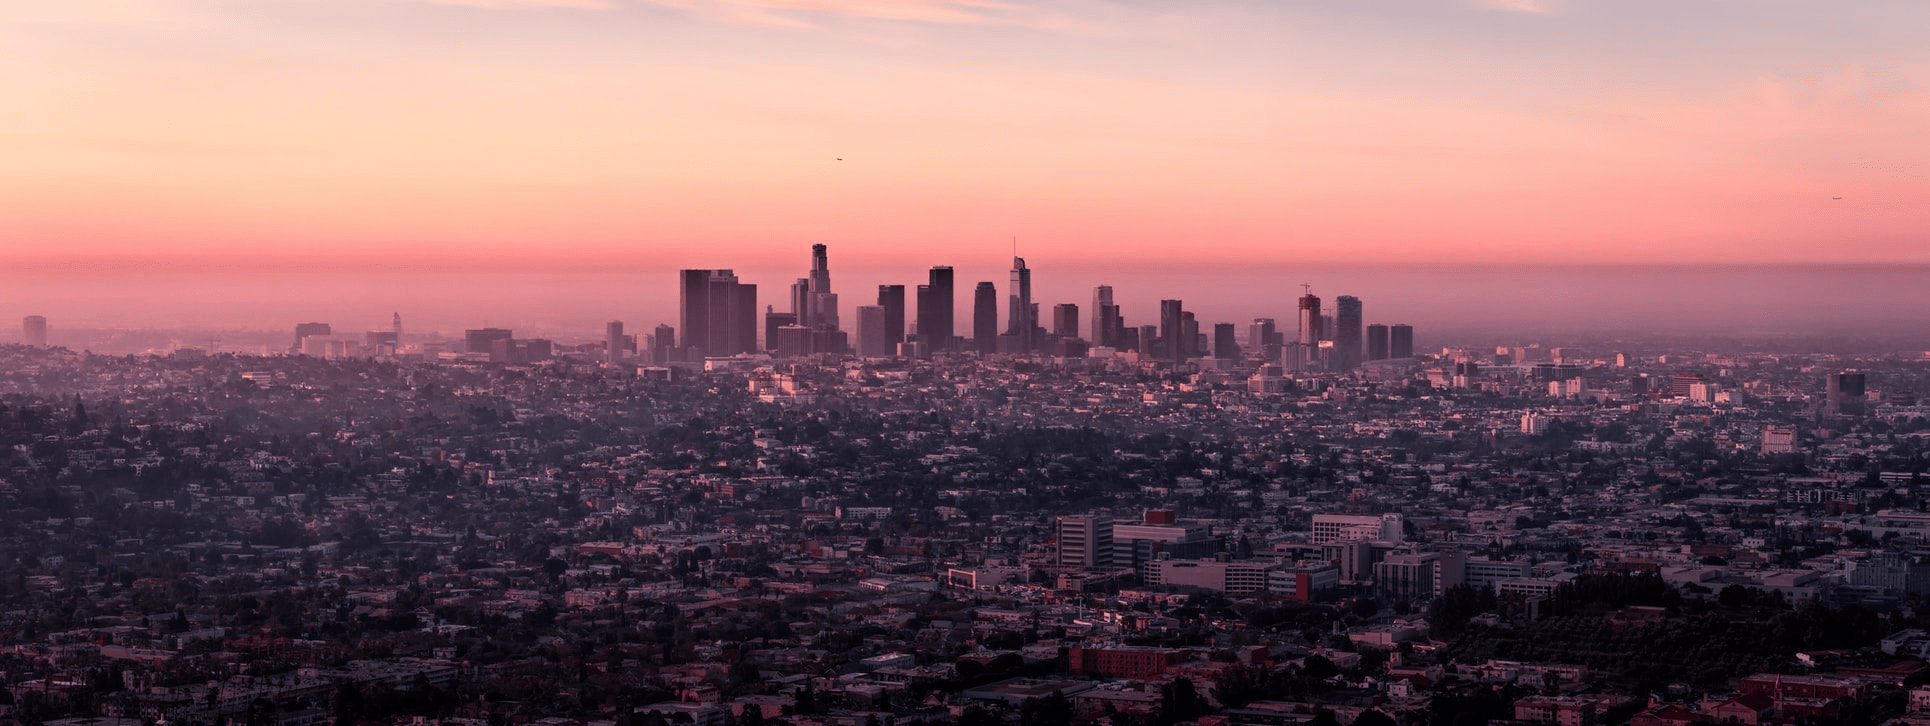 Los Angeles, アメリカ合衆国